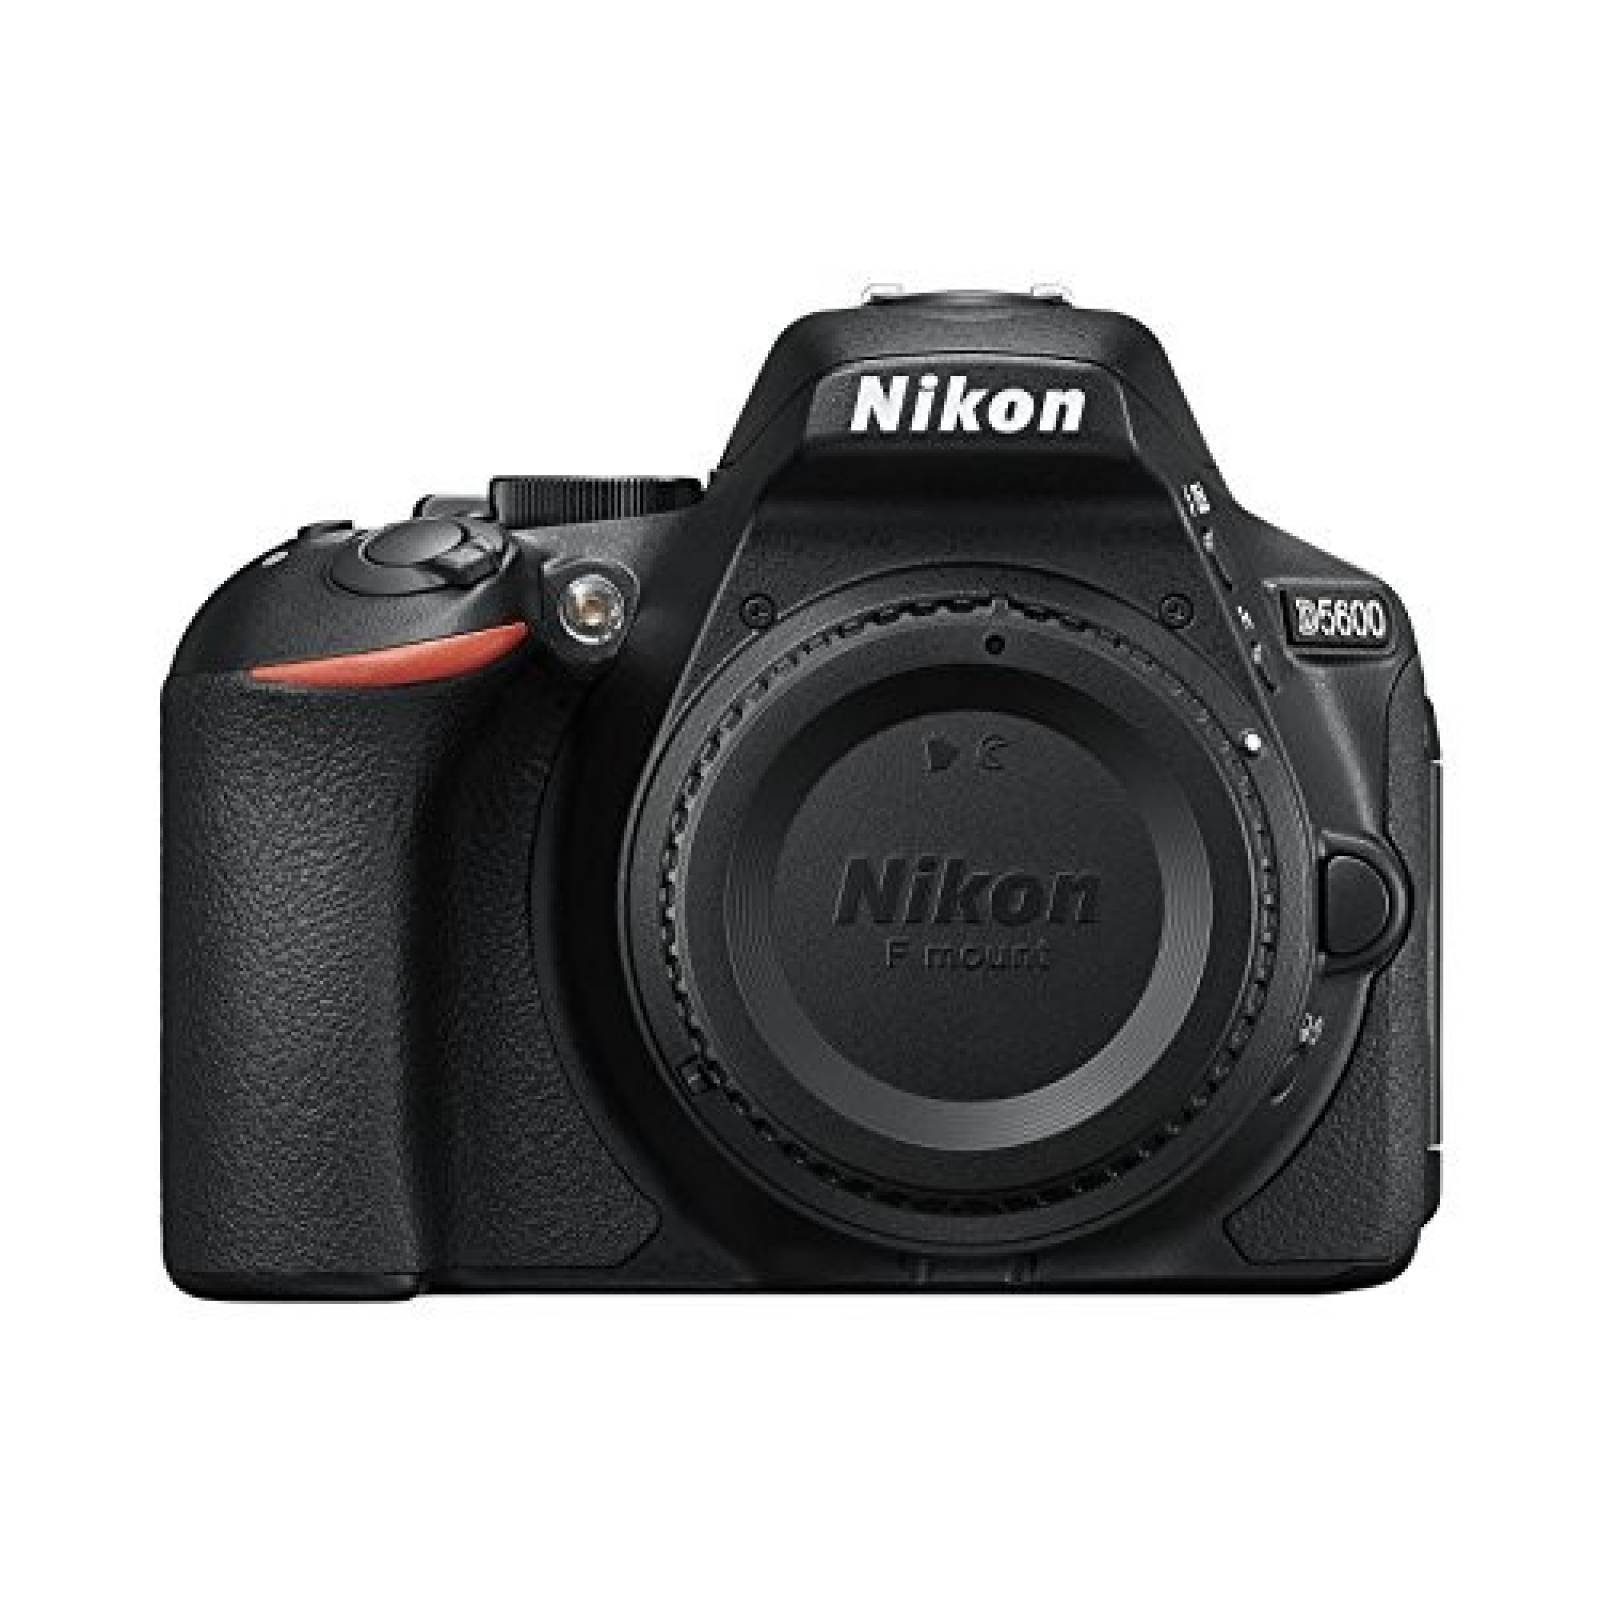 Cámara DSLR Nikon D5600 formato DX digital SLR